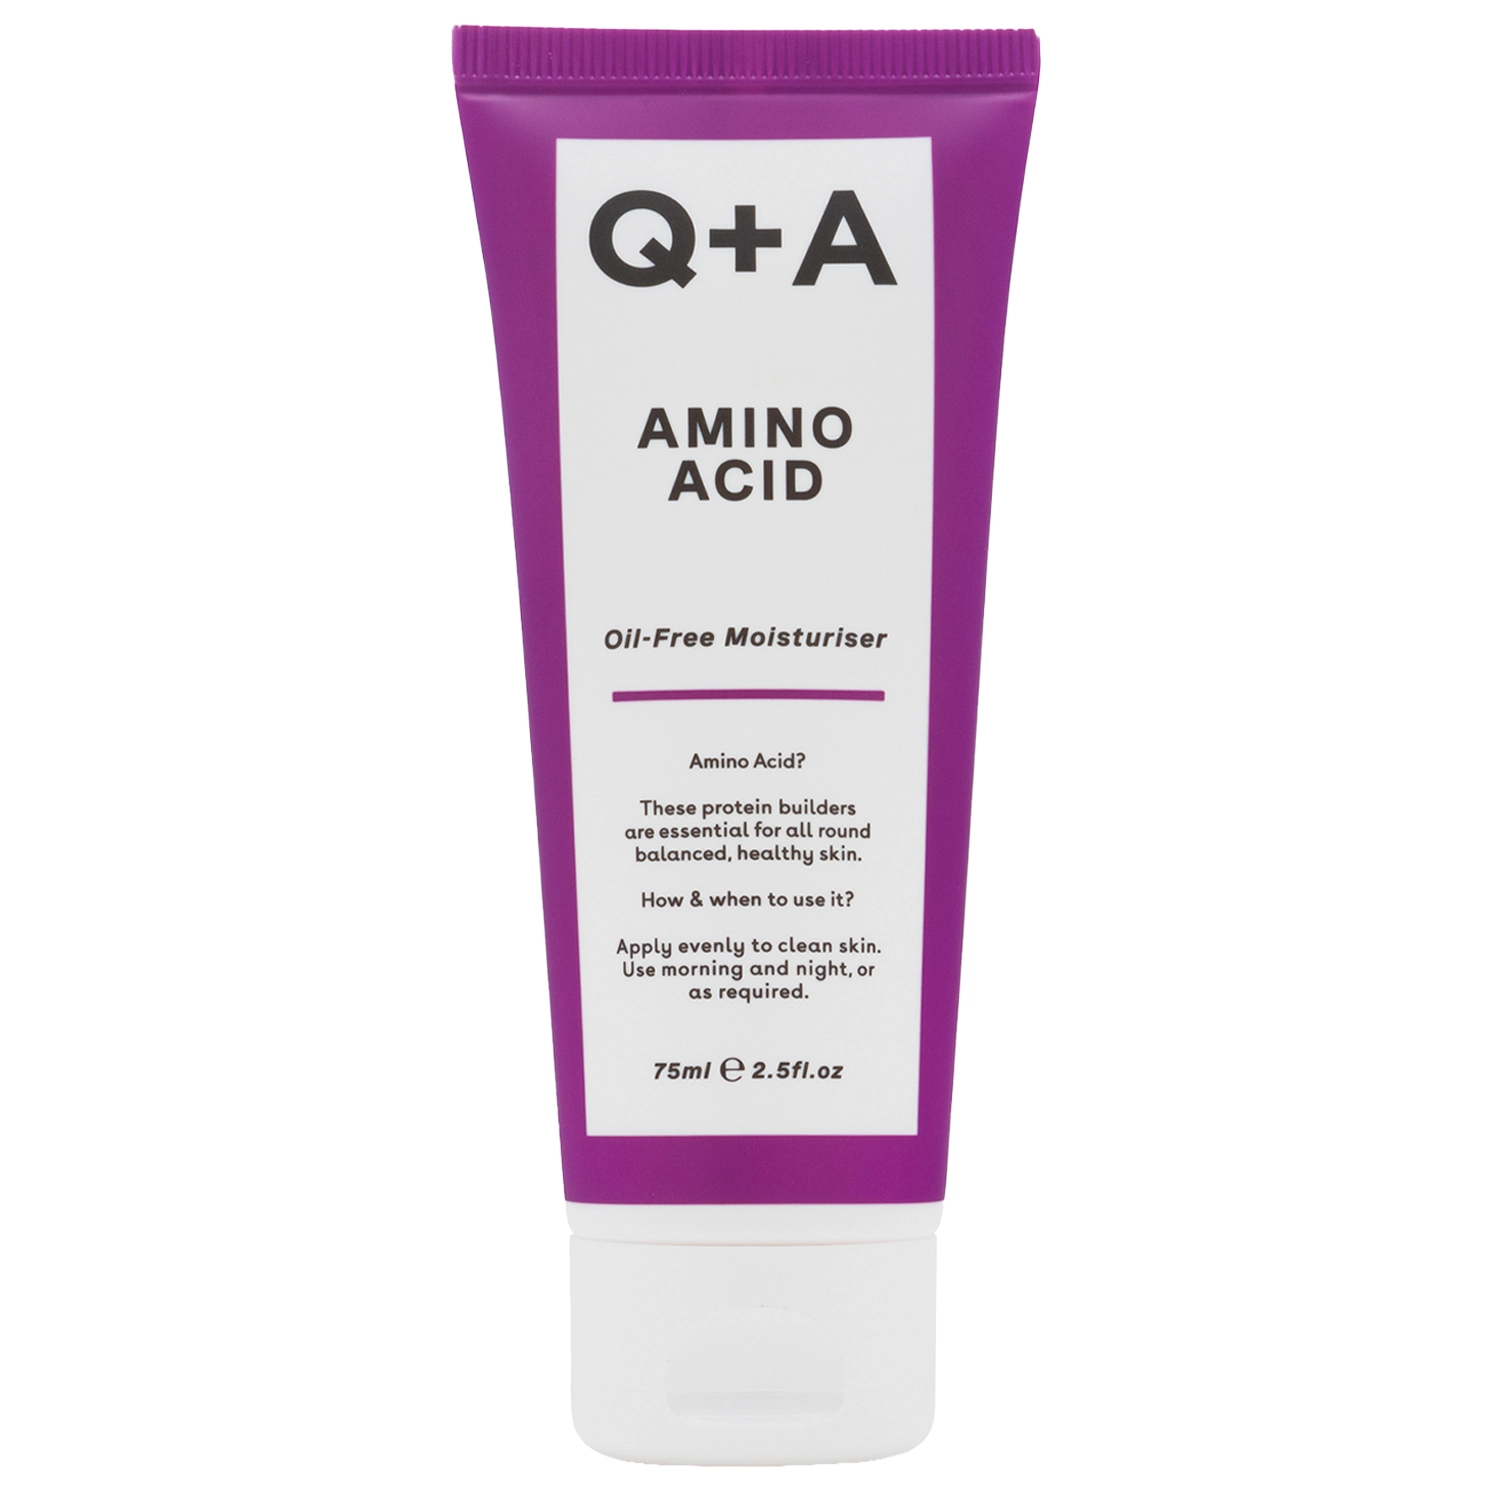 Q+A - Amino Acid Oil-Free Moisturiser - Увлажняющий крем с аминокислотами без содержания масел - 75ml